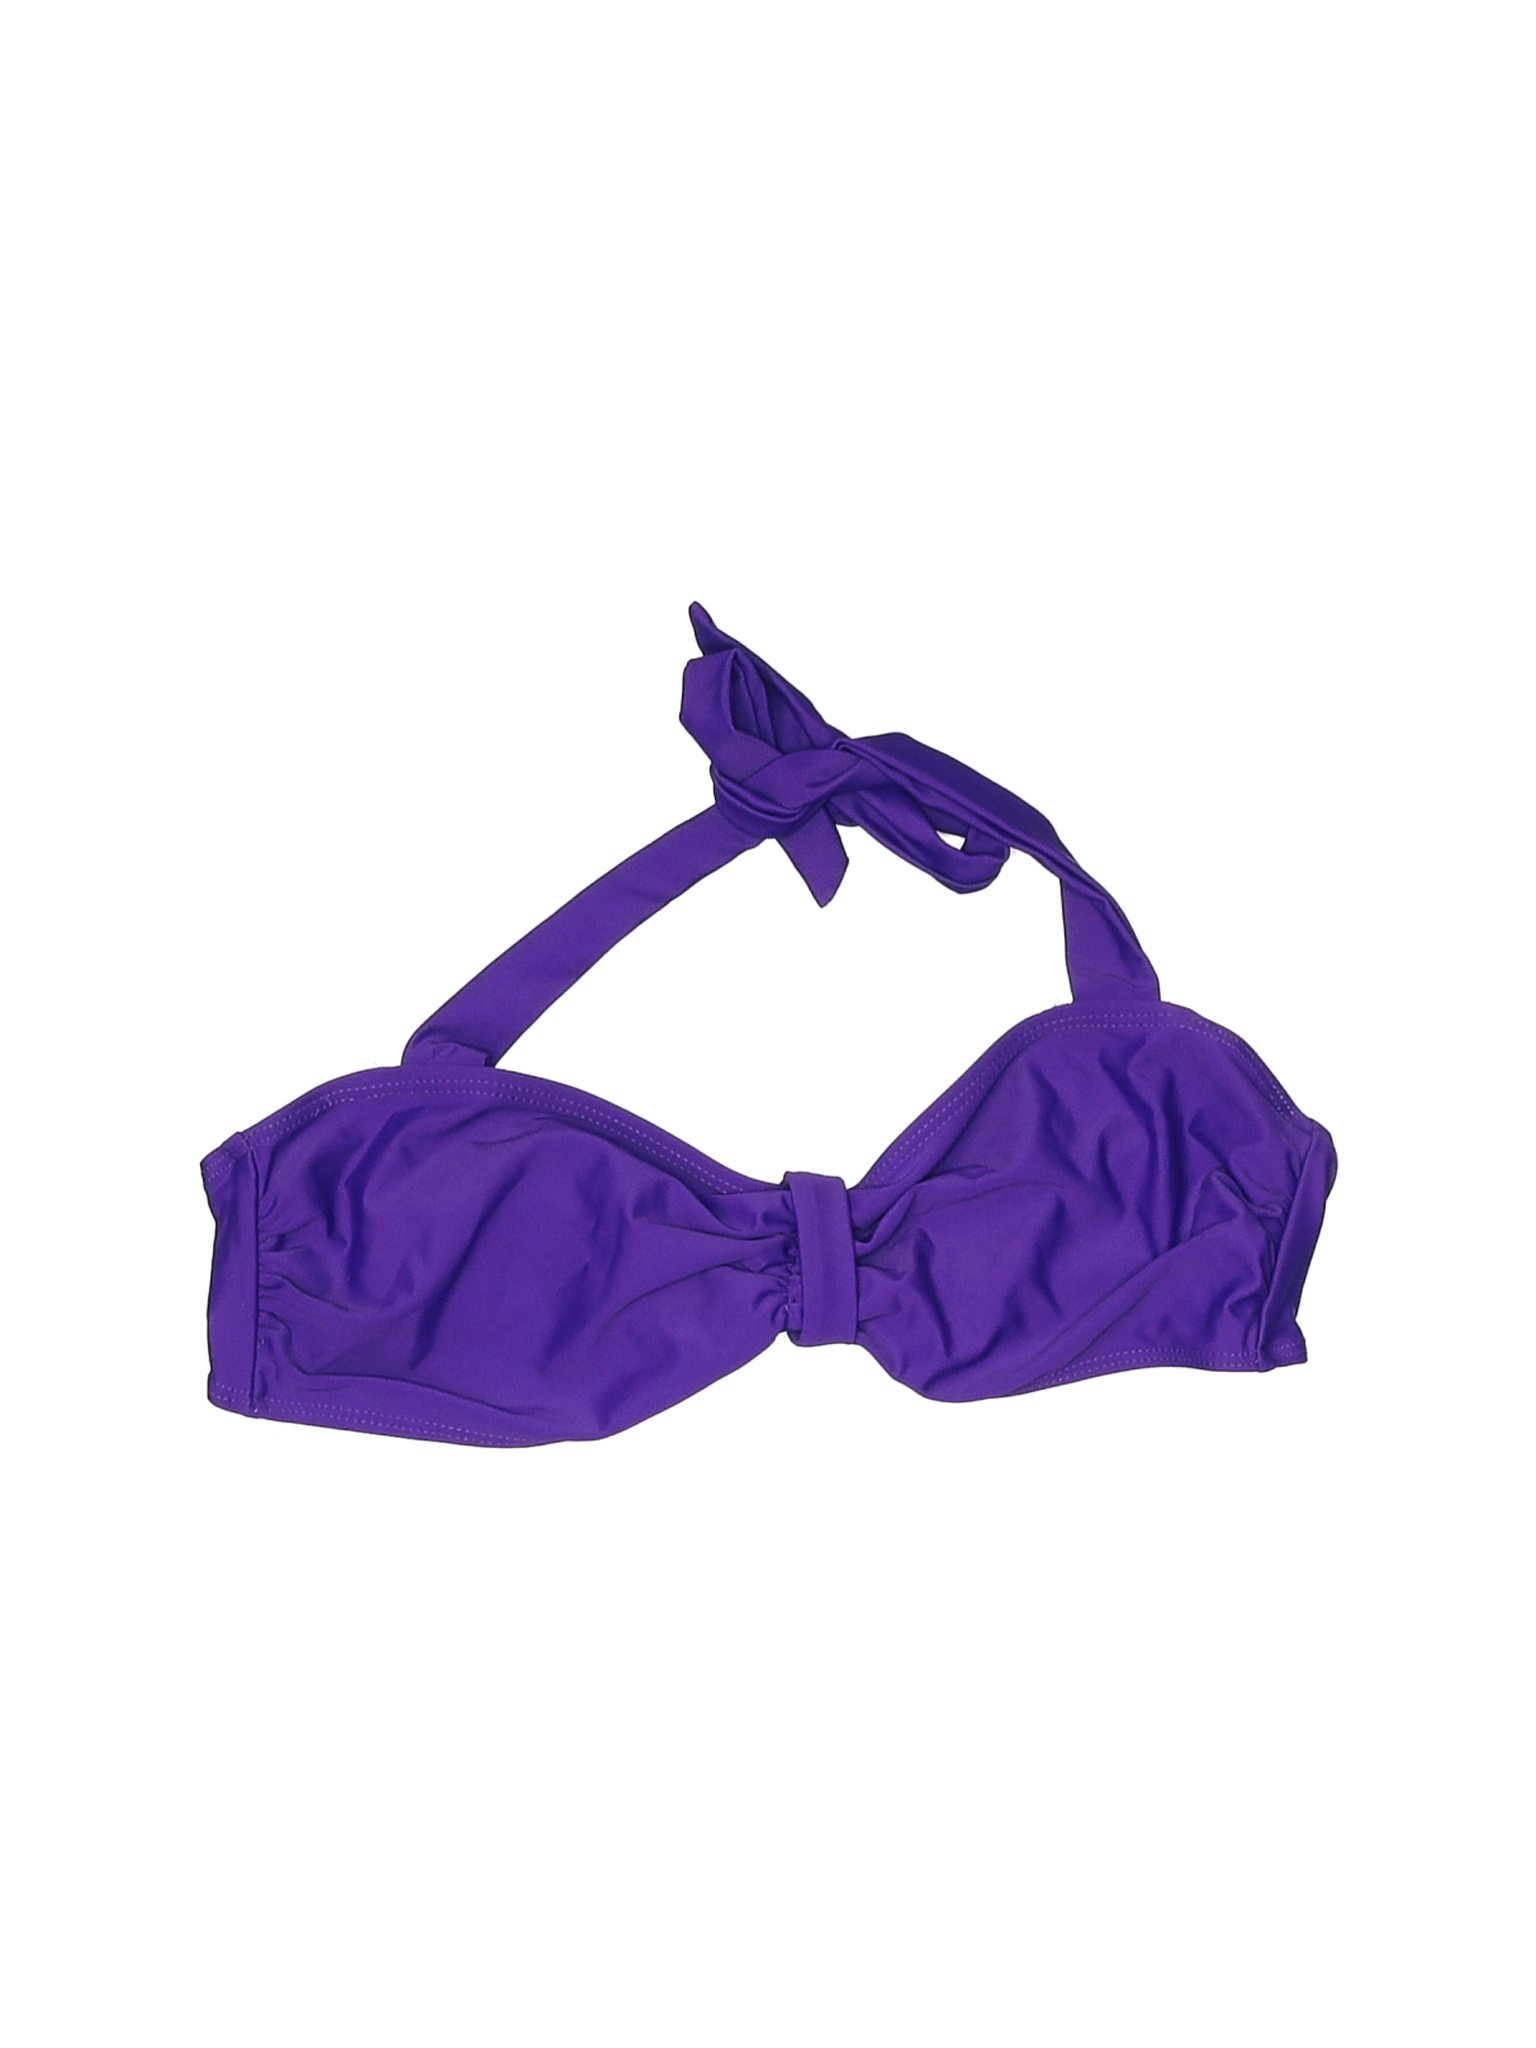 Assorted Brands Women Purple Swimsuit Top XL | eBay